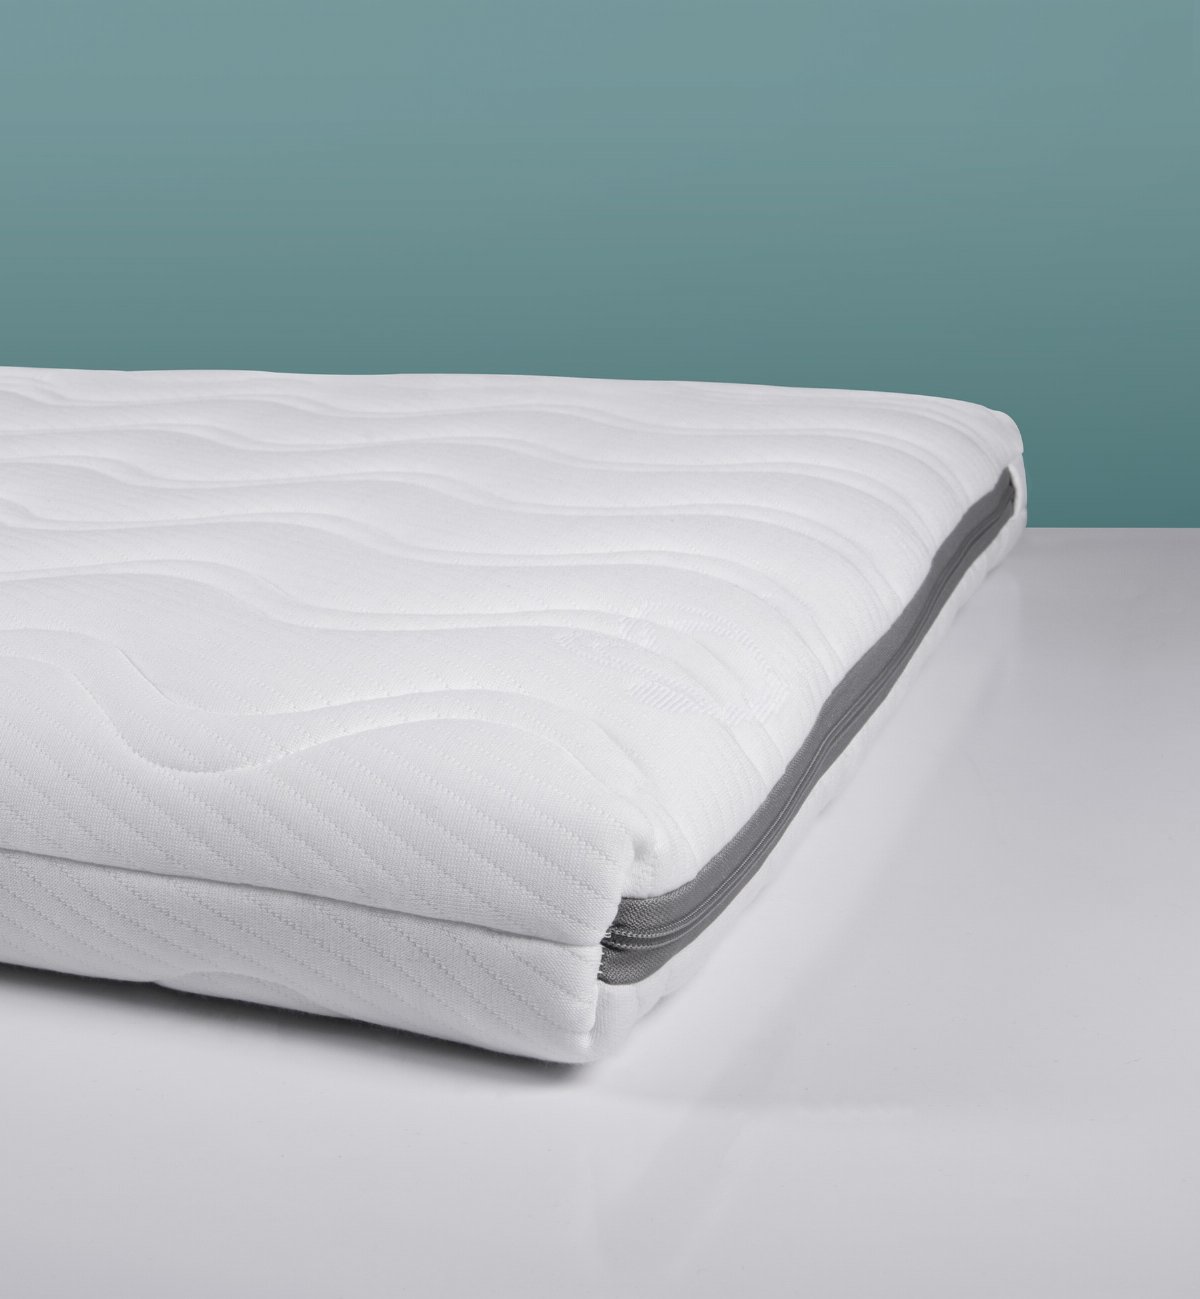 COCOLATEX® 95x75x5 cm organic park mattress with removable cover Kadolis